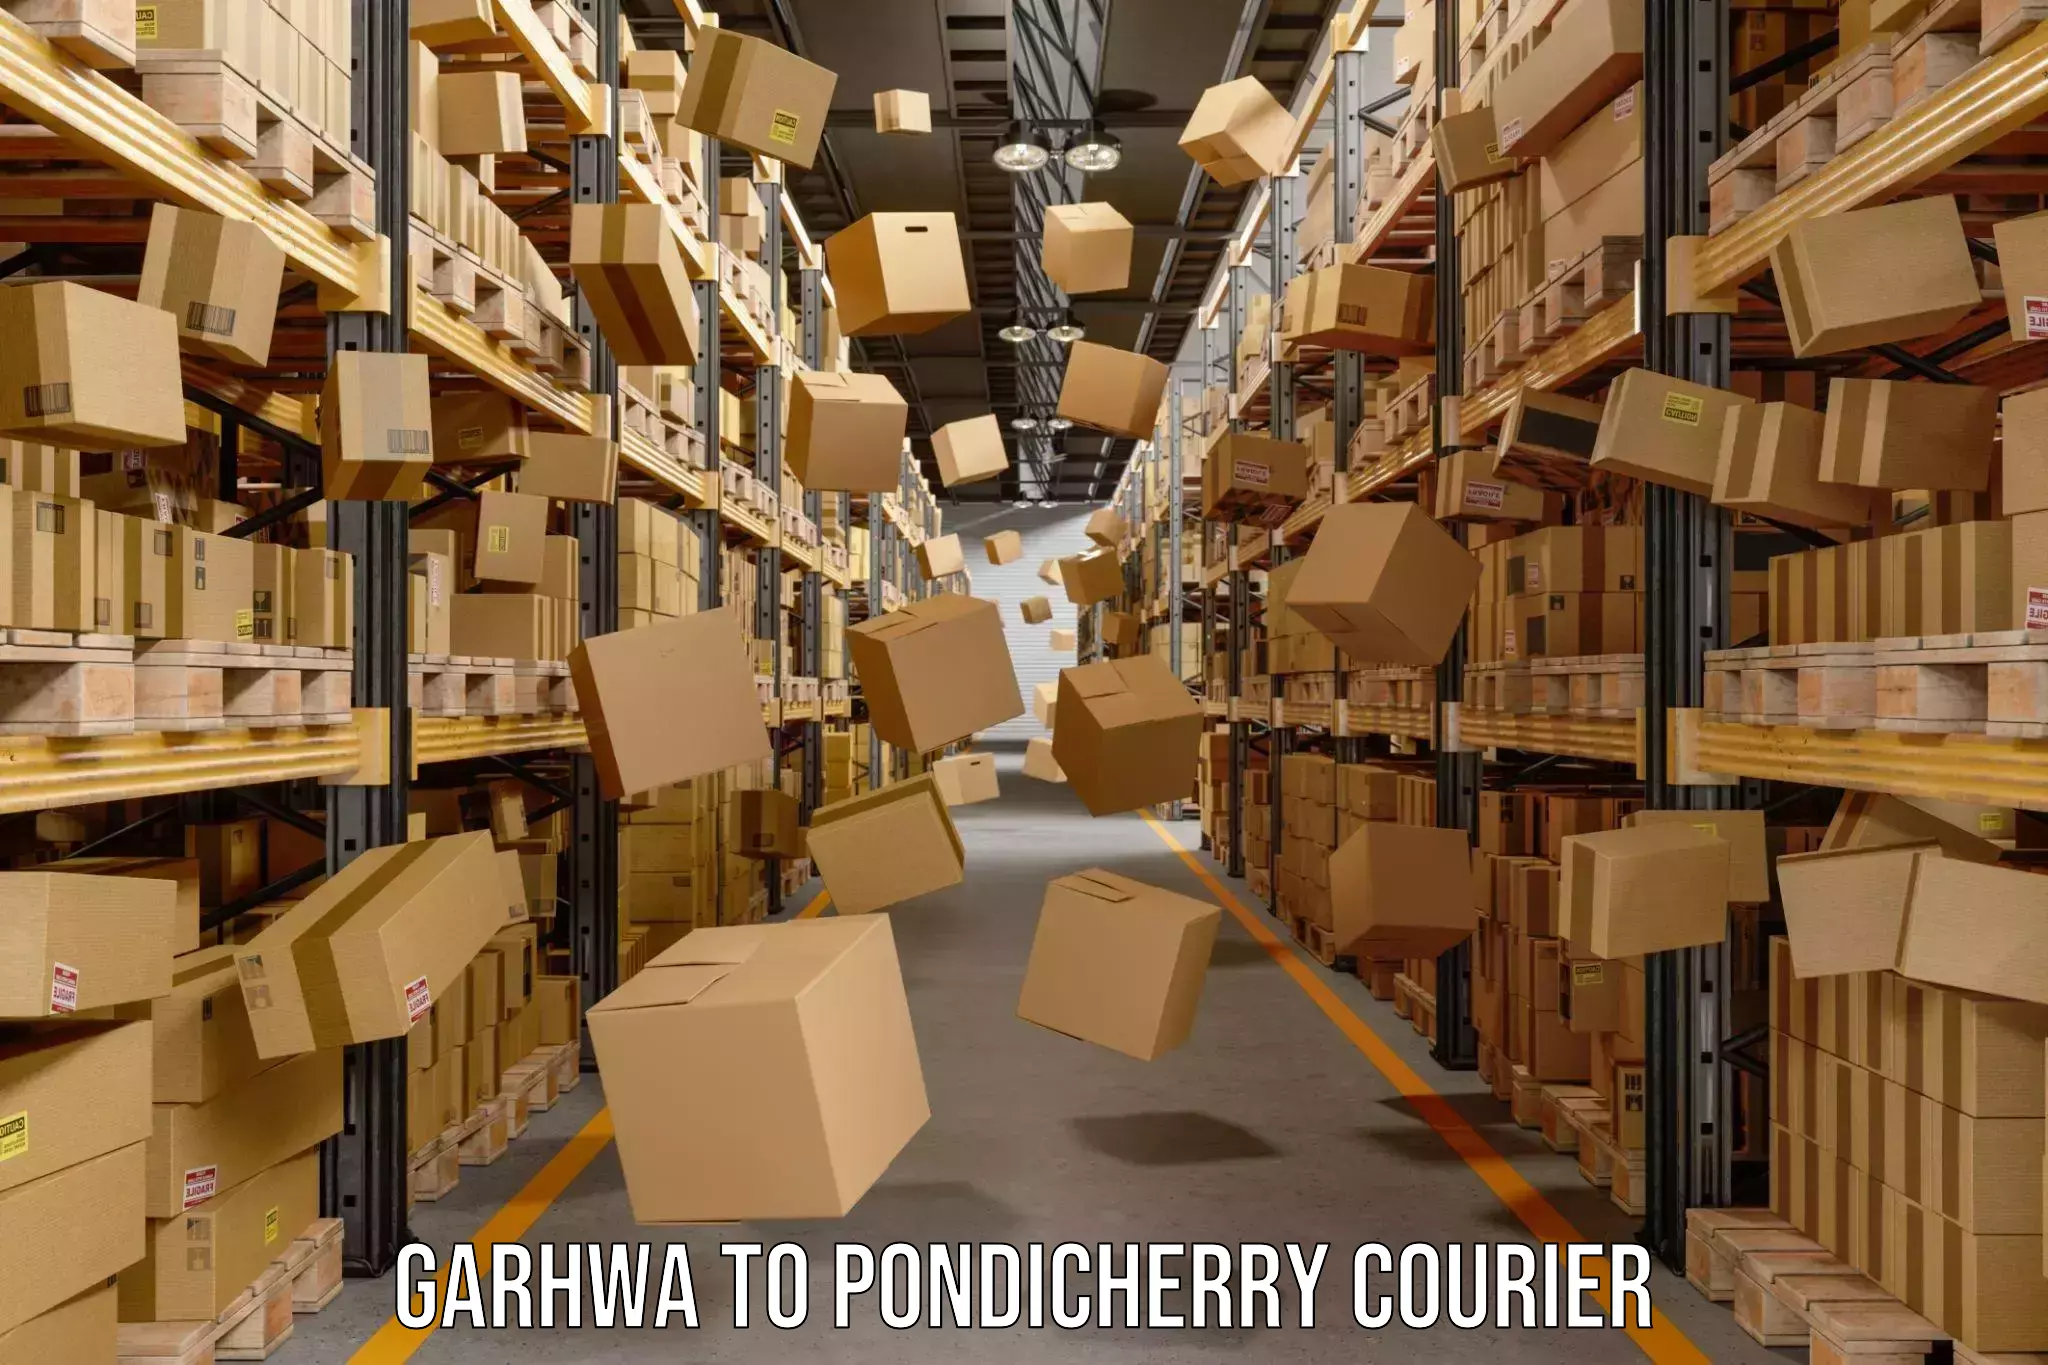 On-call courier service Garhwa to Pondicherry